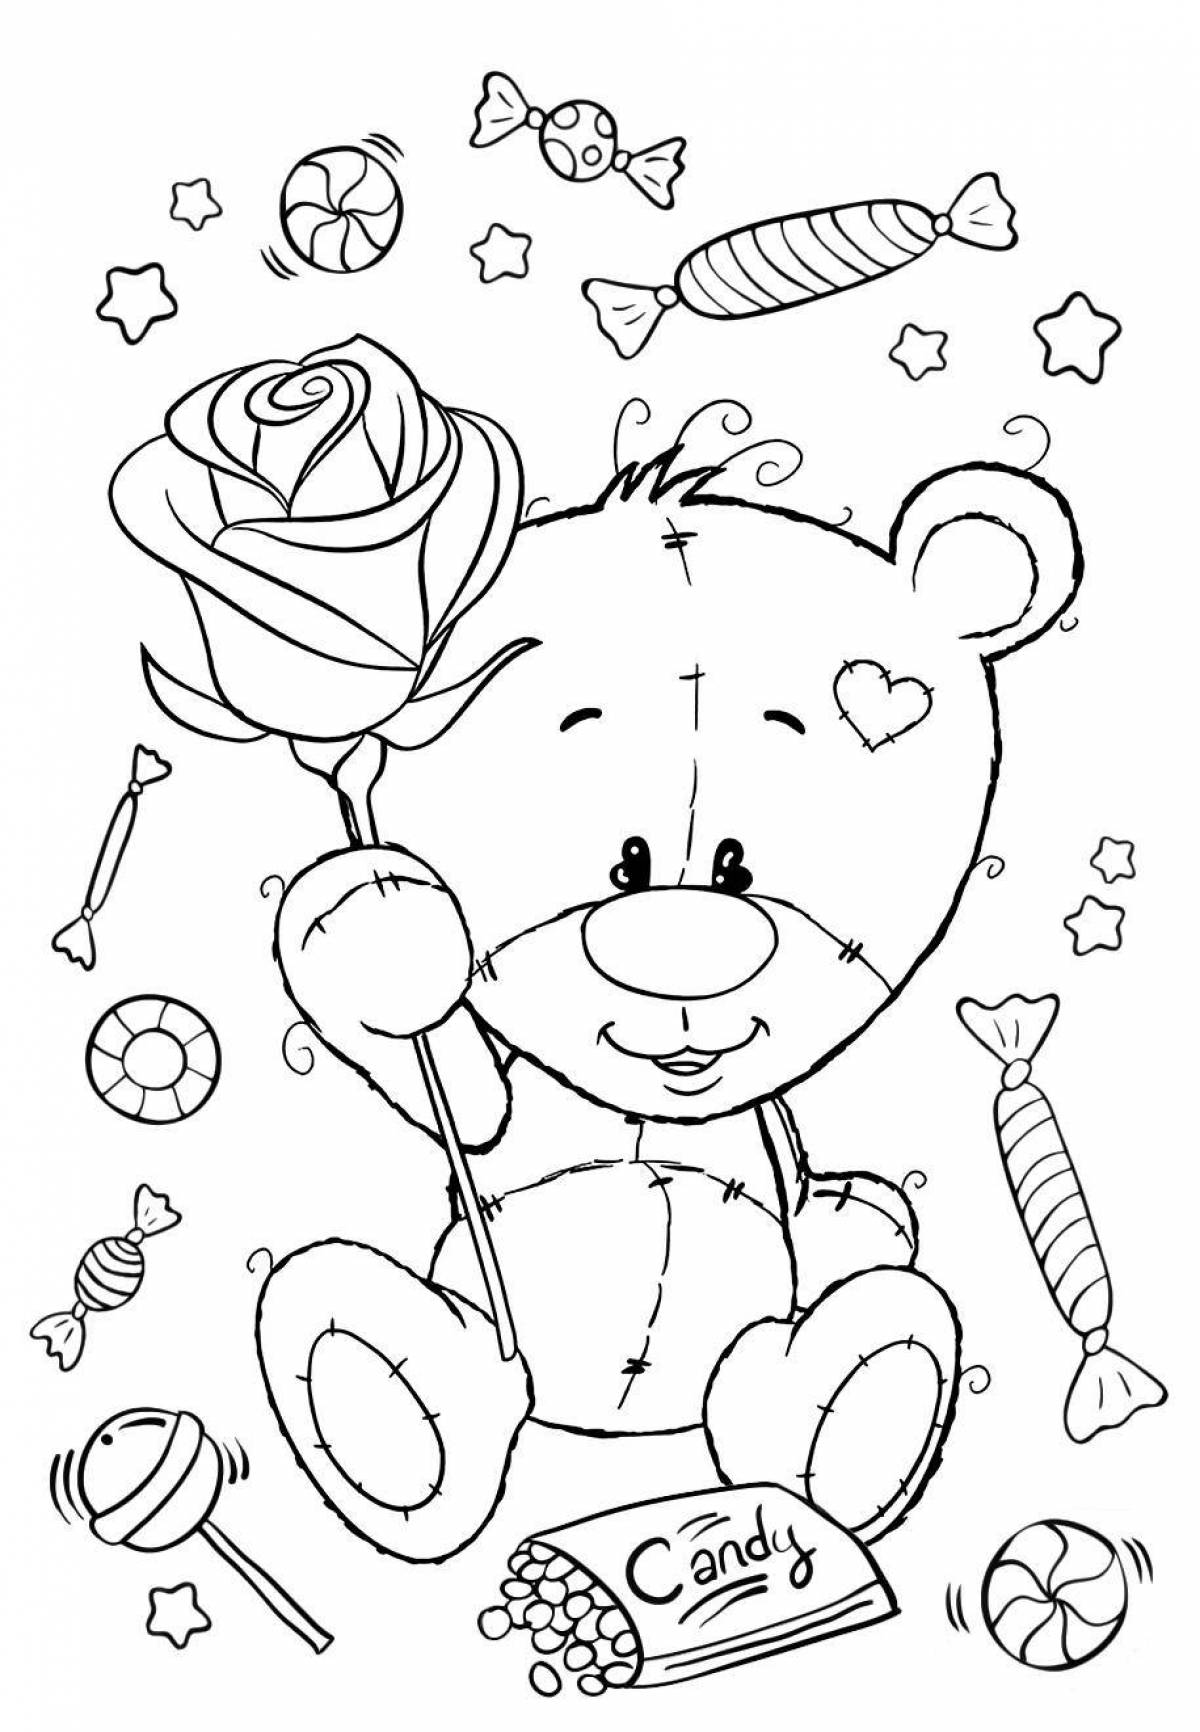 Fancy teddy bear coloring page